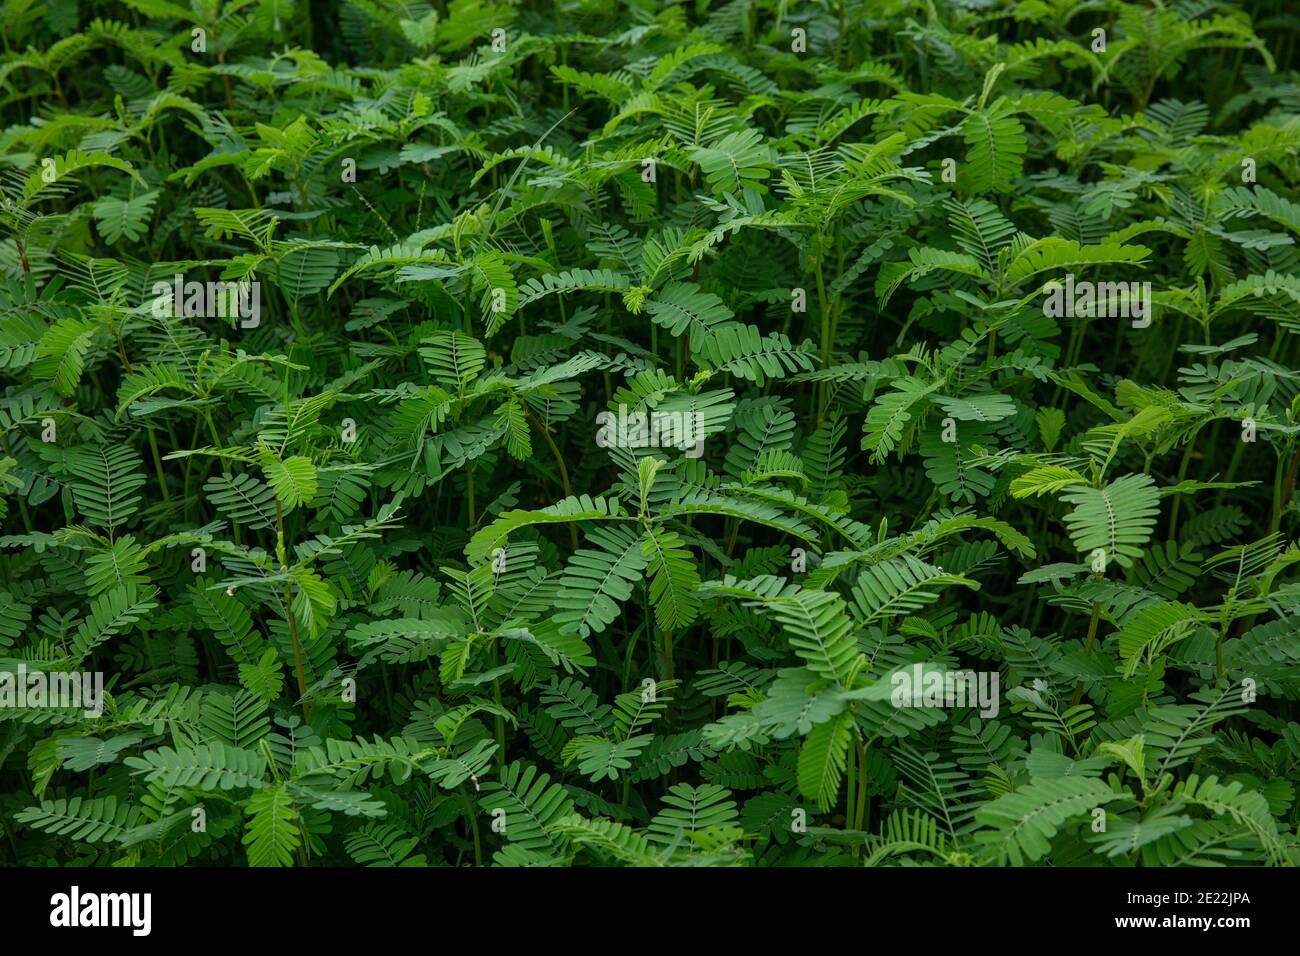 Fern leaf in the field (Dhanichatree), Brahmanbaria, Bangladesh. Stock Photo